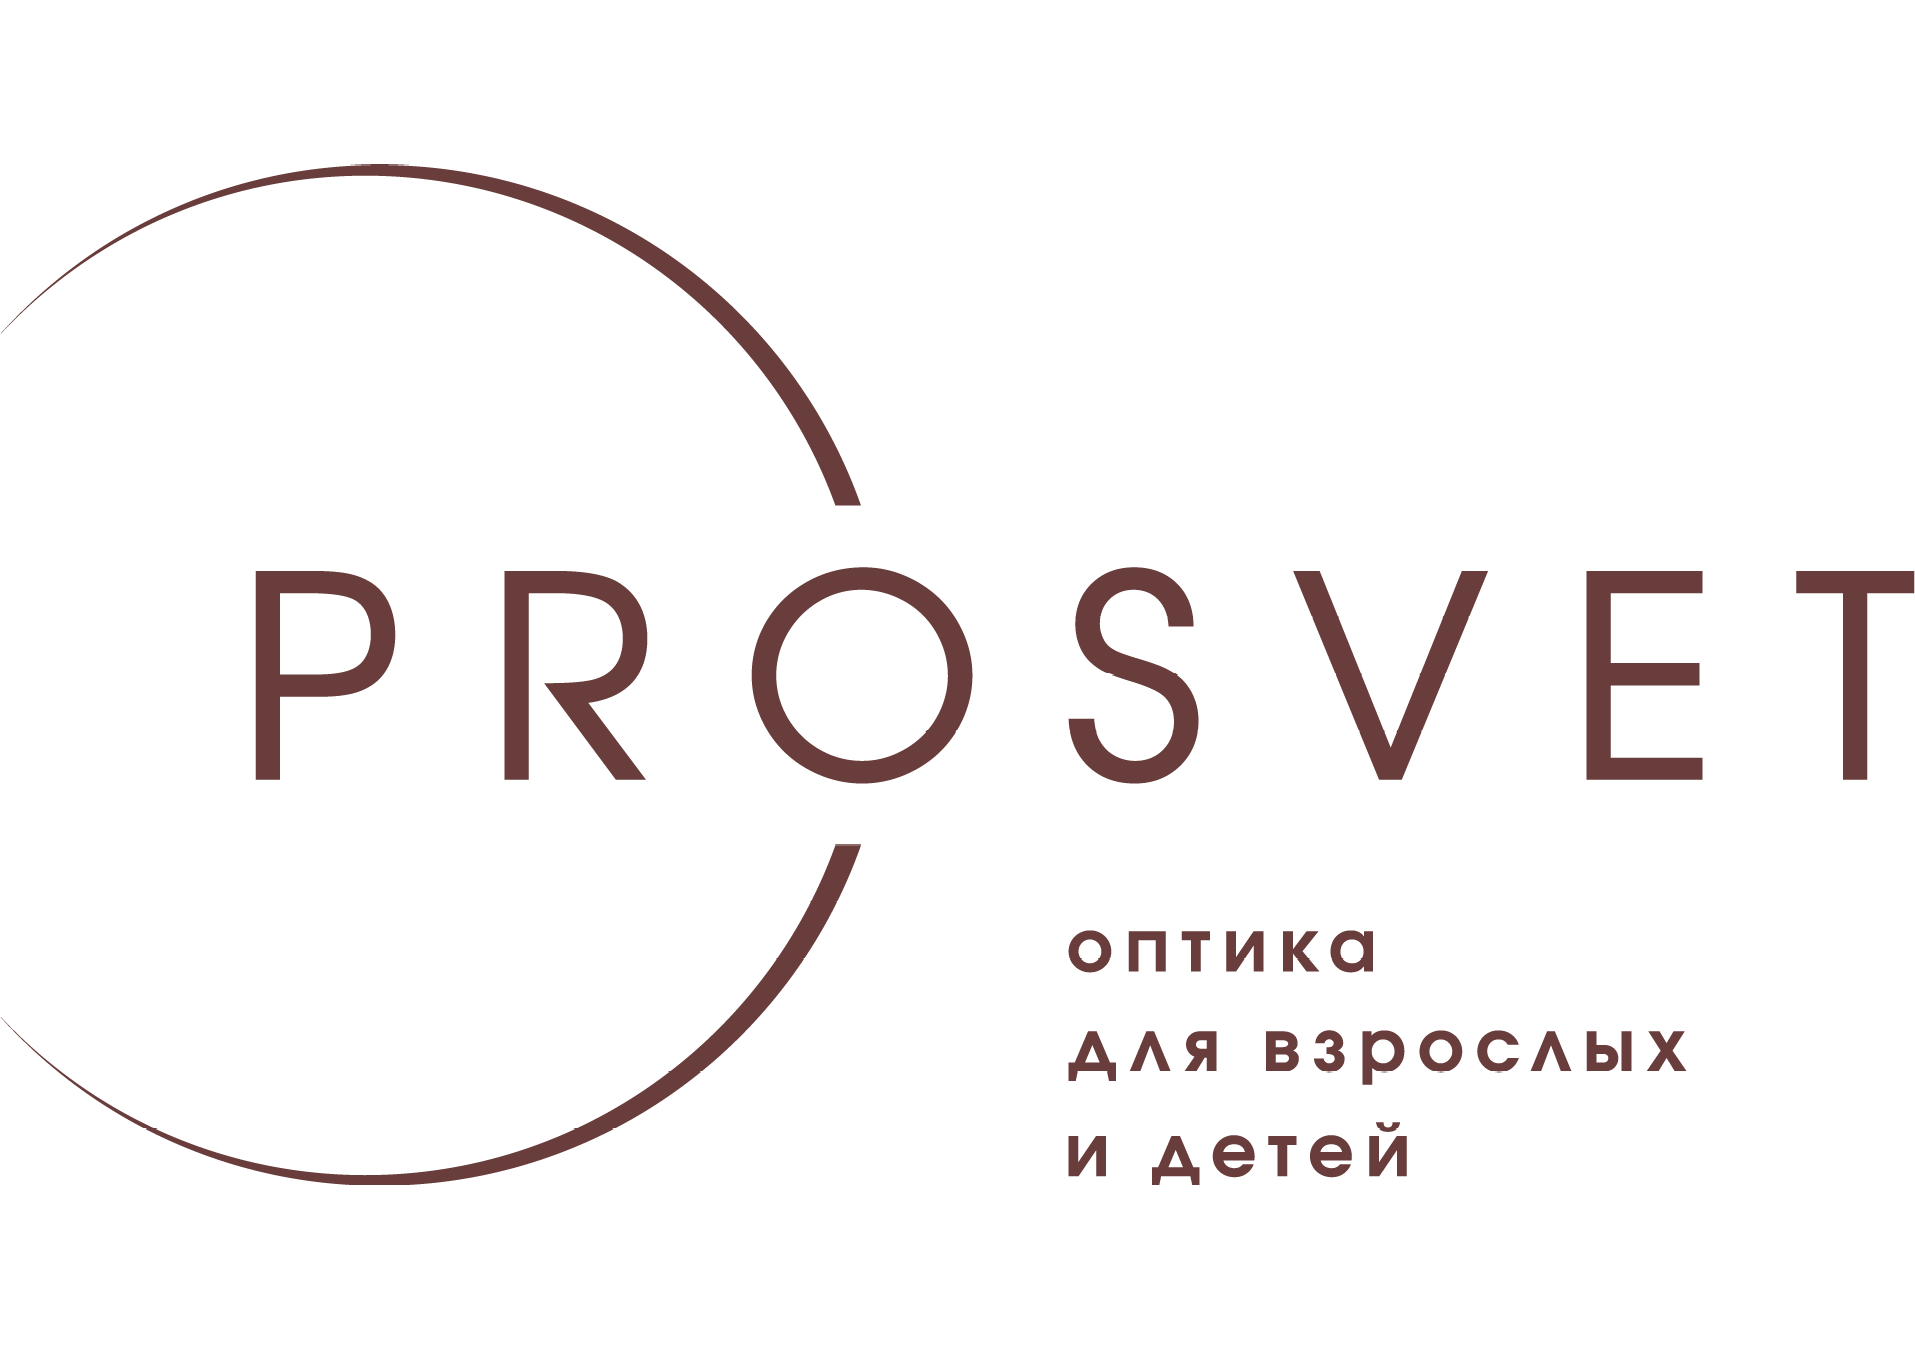 Сеть оптик "PROSVET" на Кунцевщине